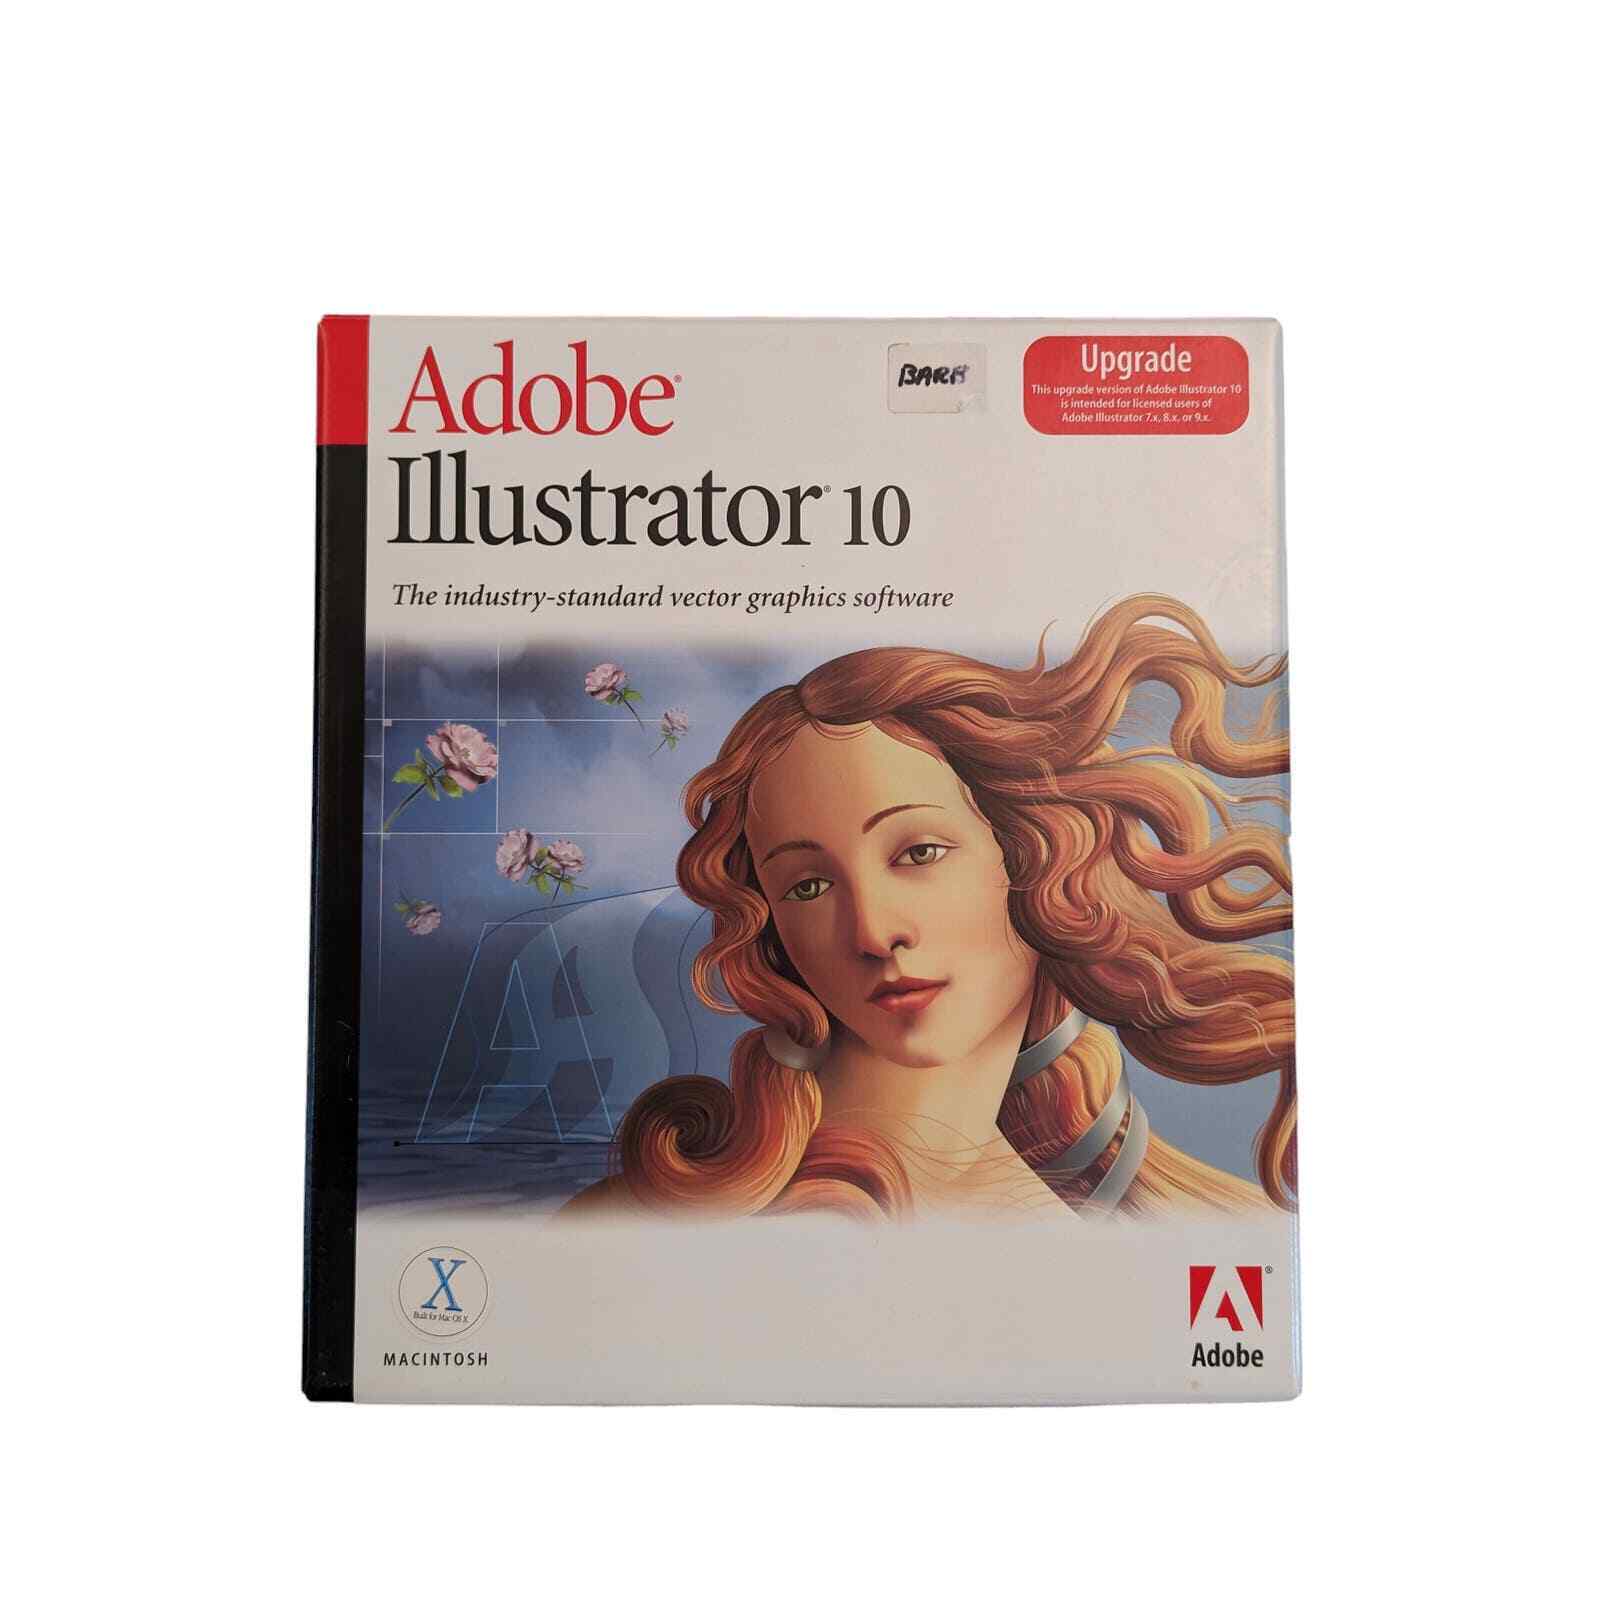 Adobe Illustrator 10 Mac Upgrade with Serial Number Macintosh Big Box